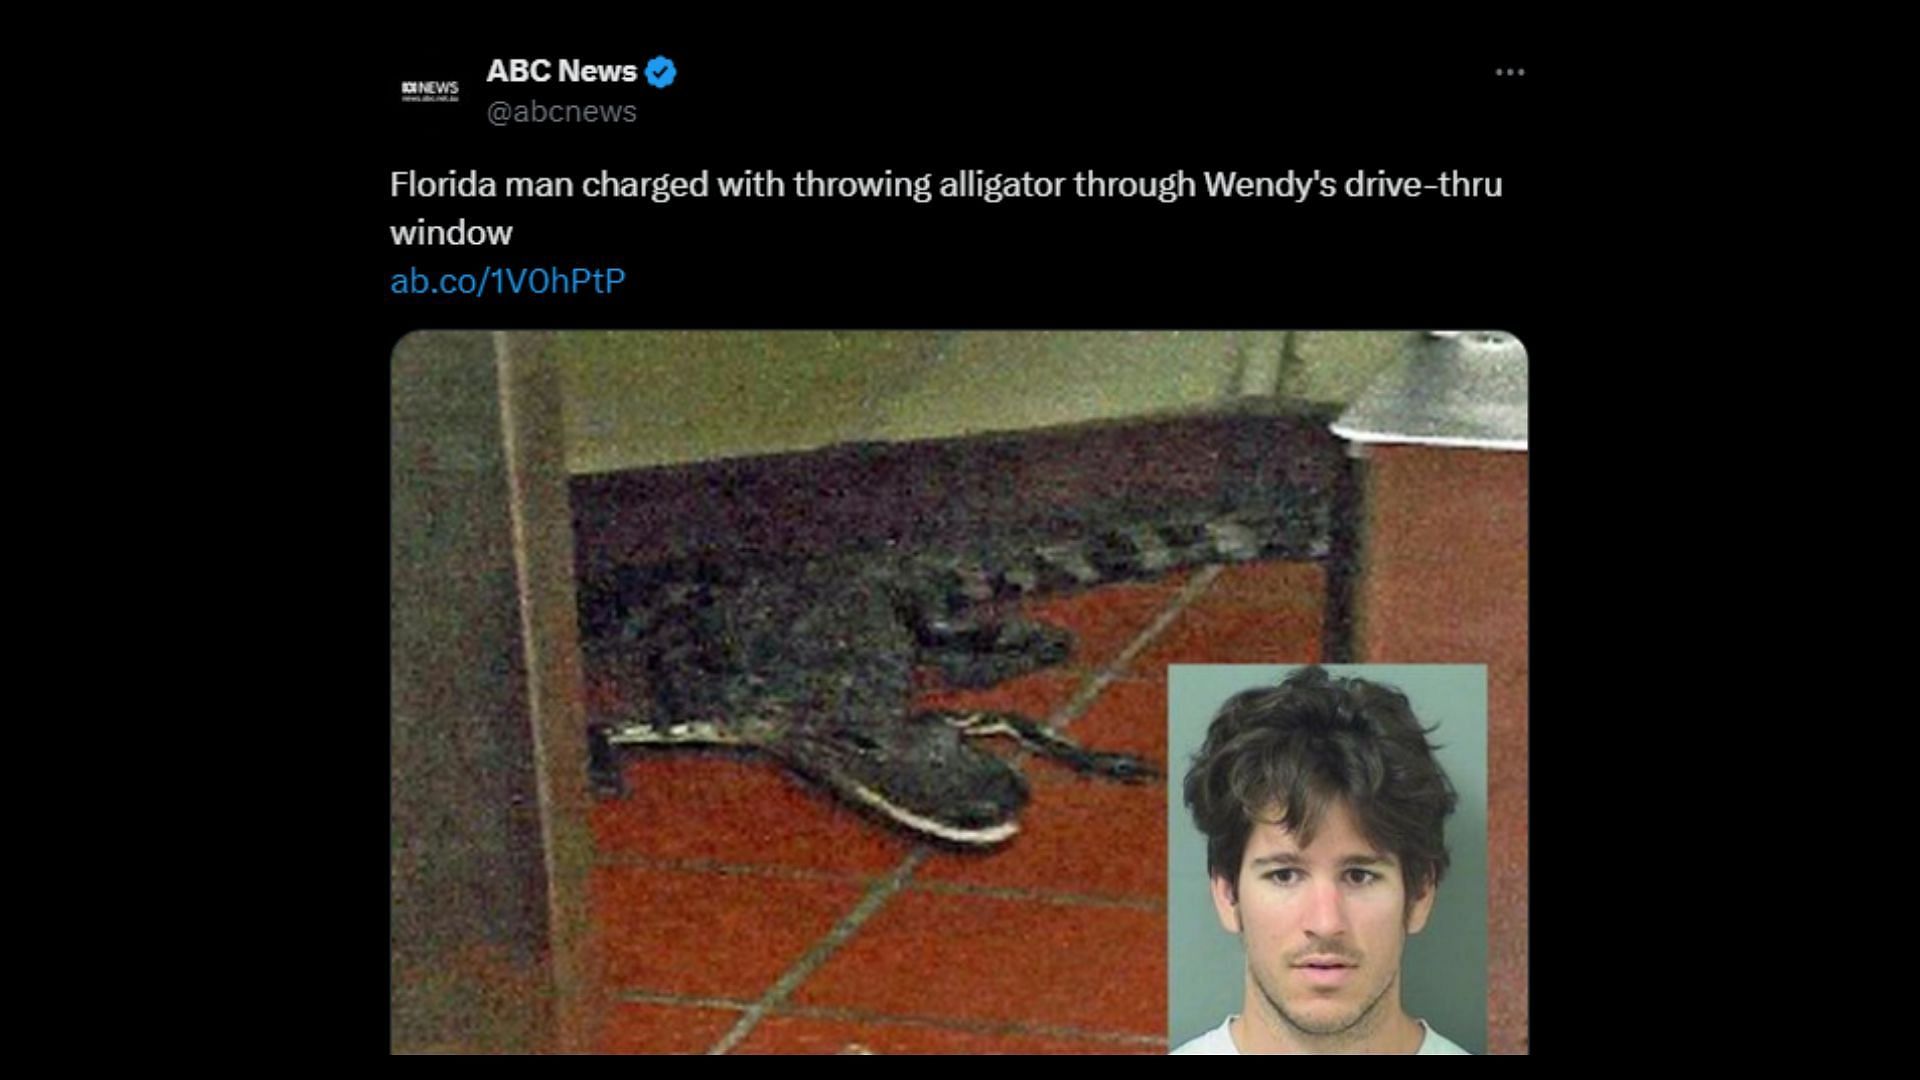 ABC News tweet about the Florida moment (Image via X/@abcnews)